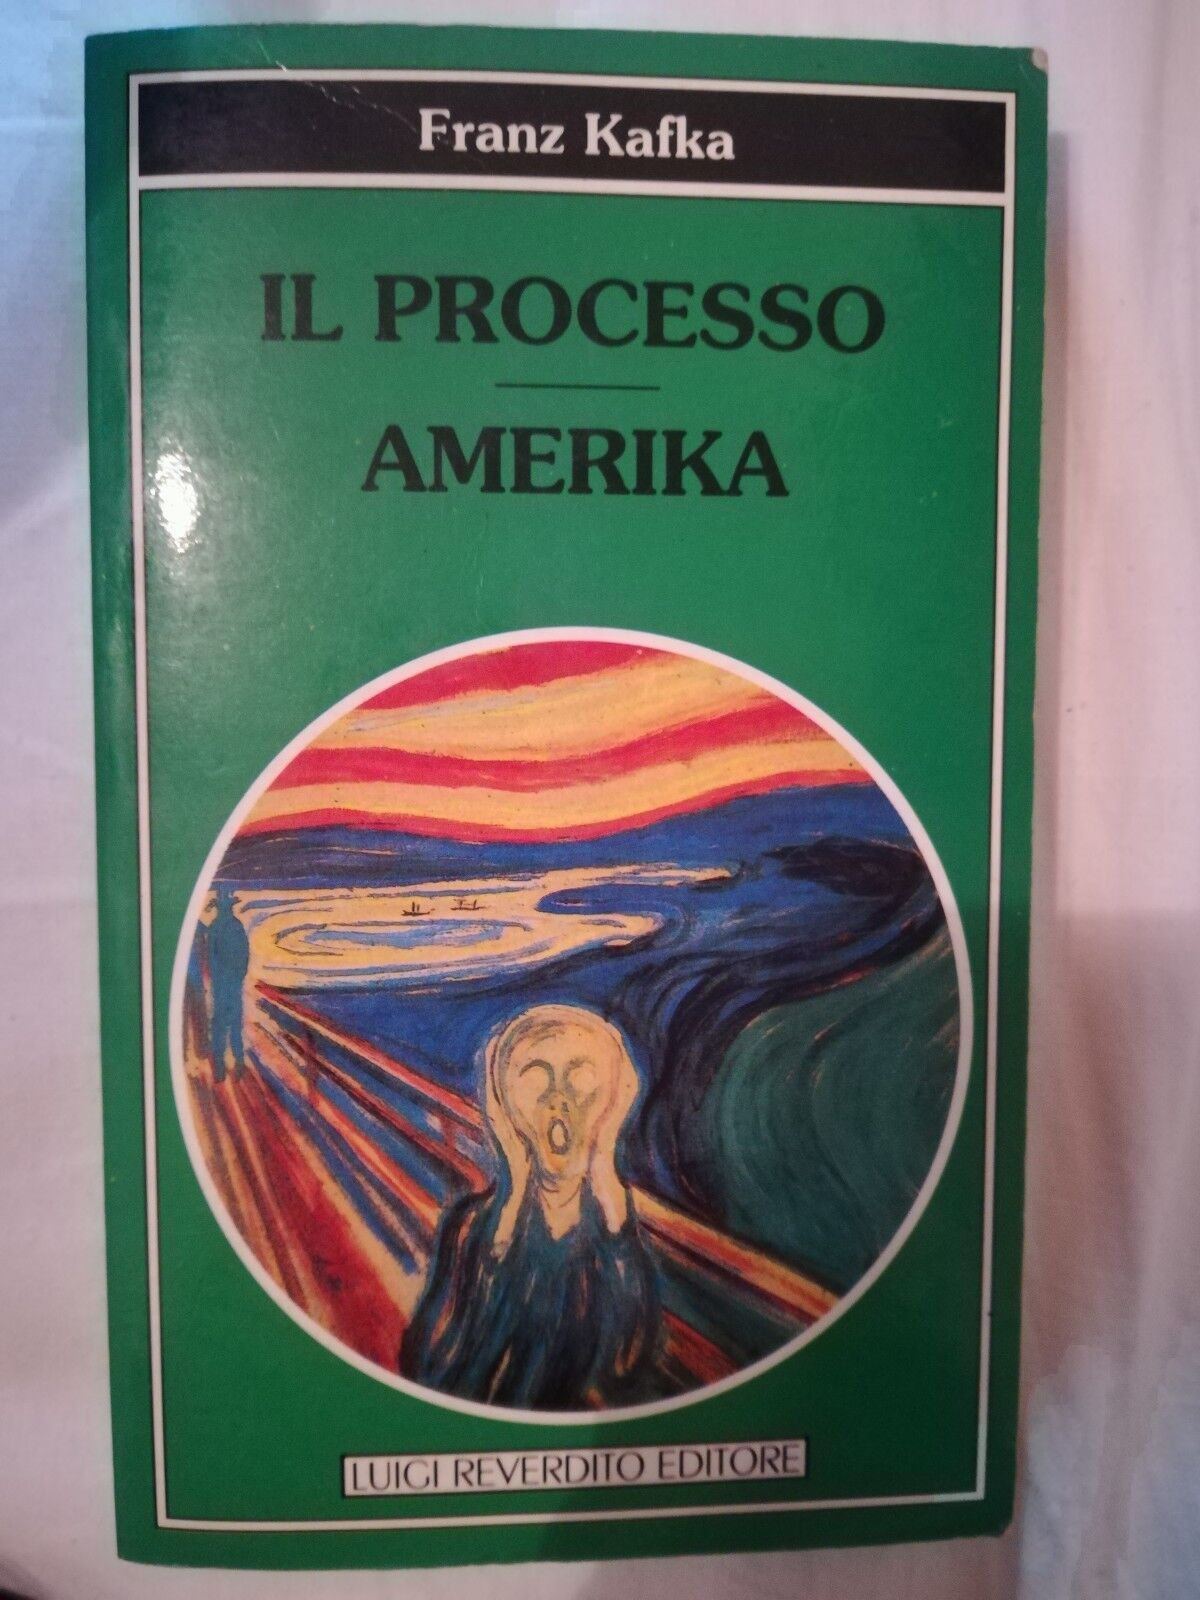 Il processo - Amerika - Franz Kafka - Reverdito - 1995 - M